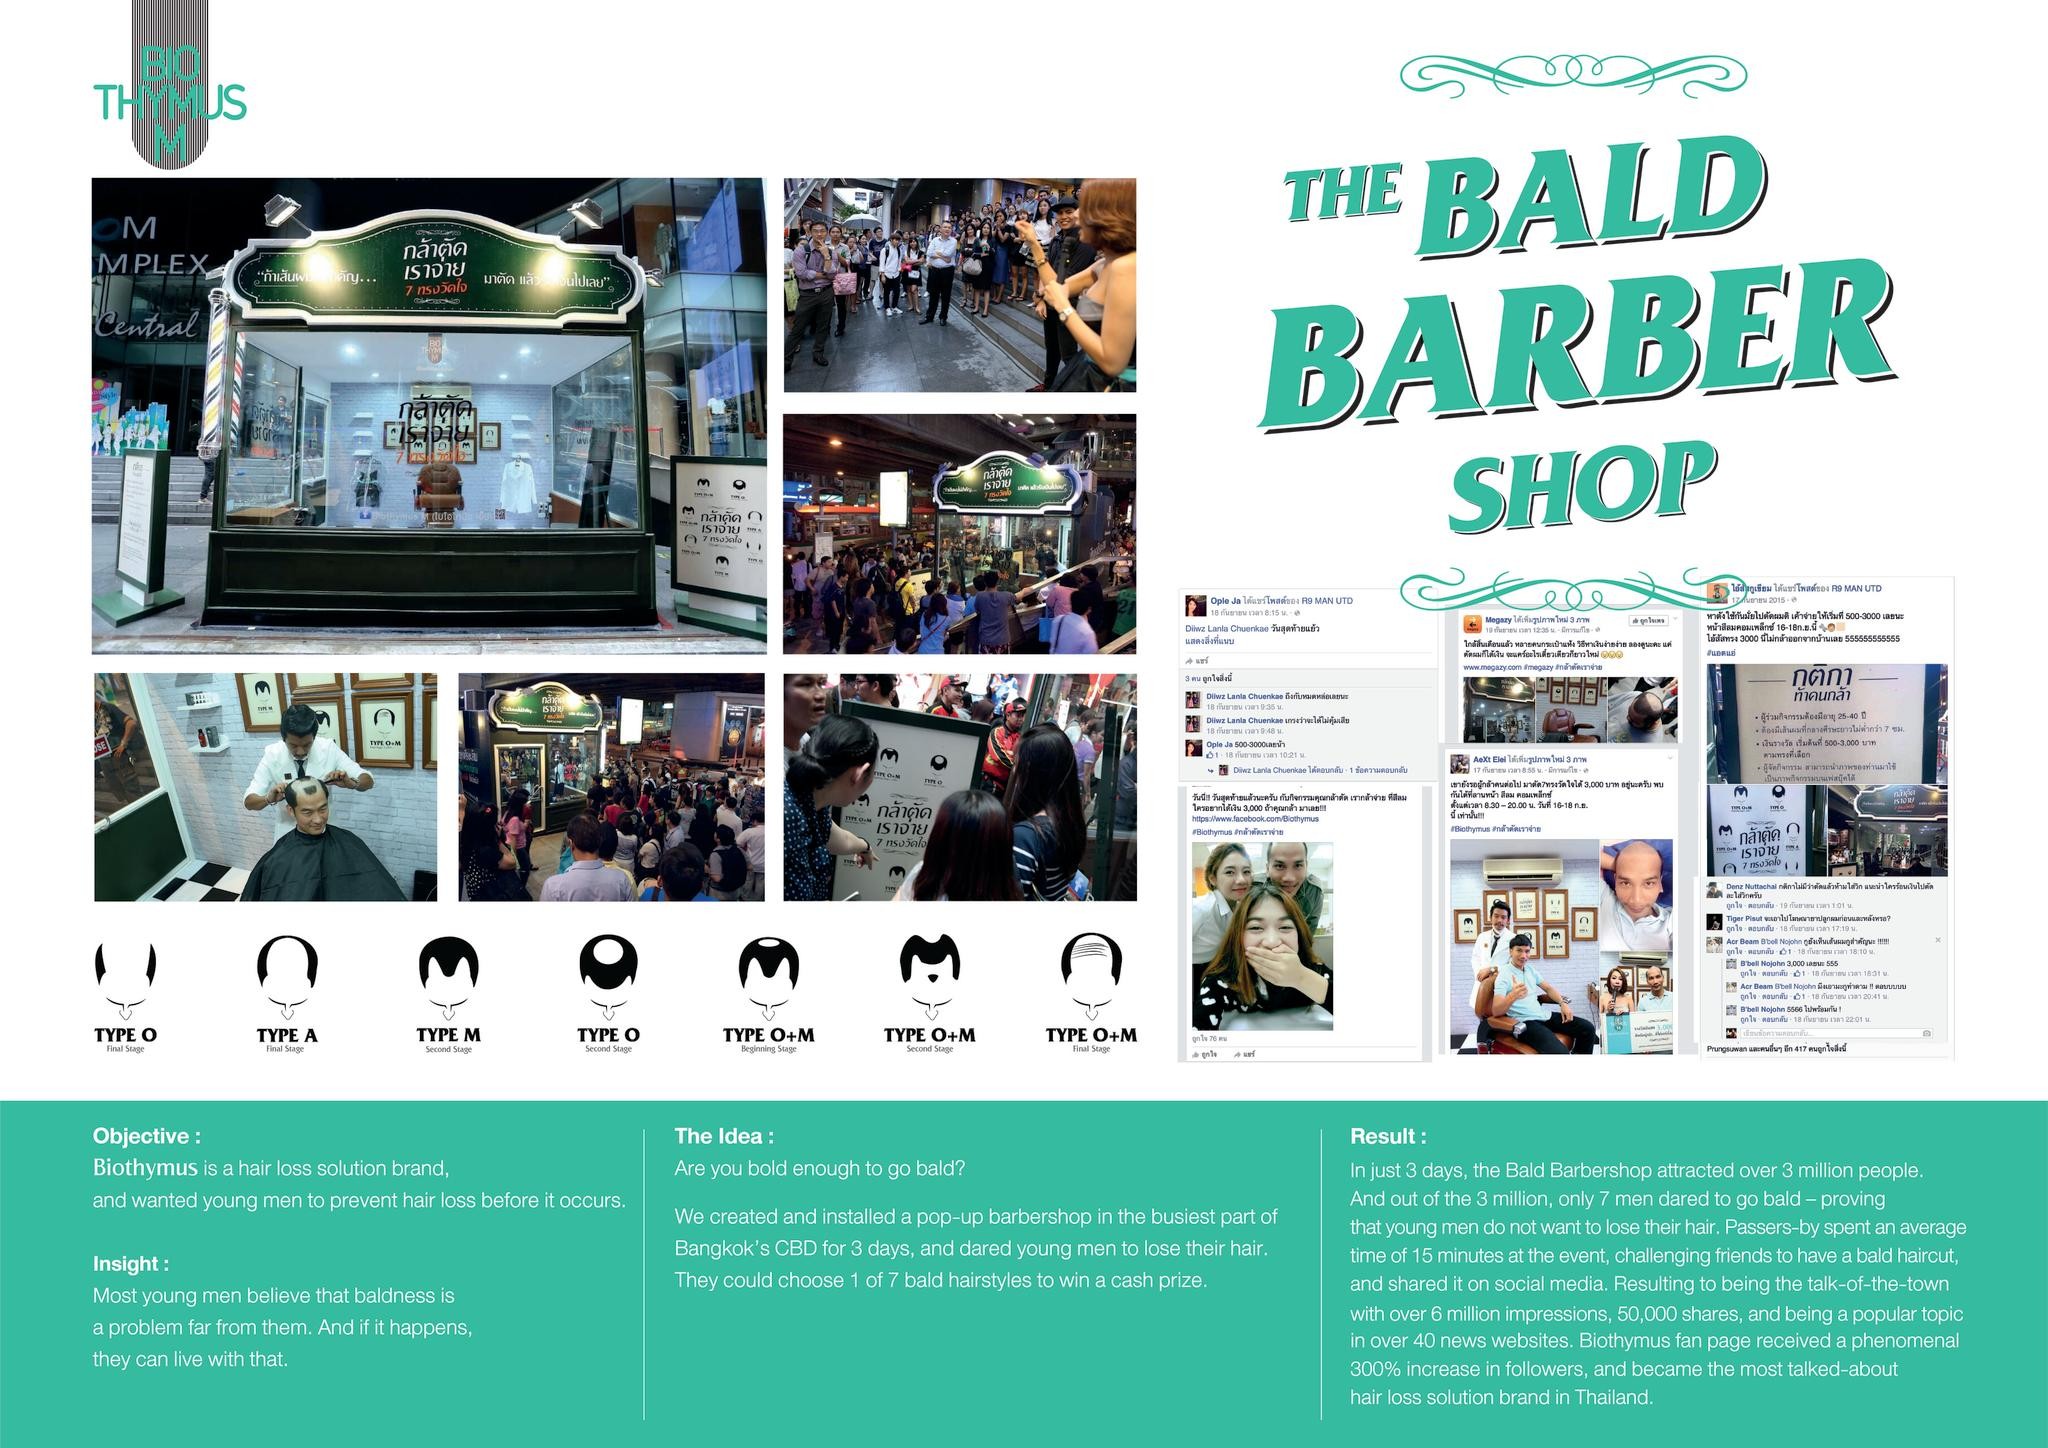 The Bald Barbershop